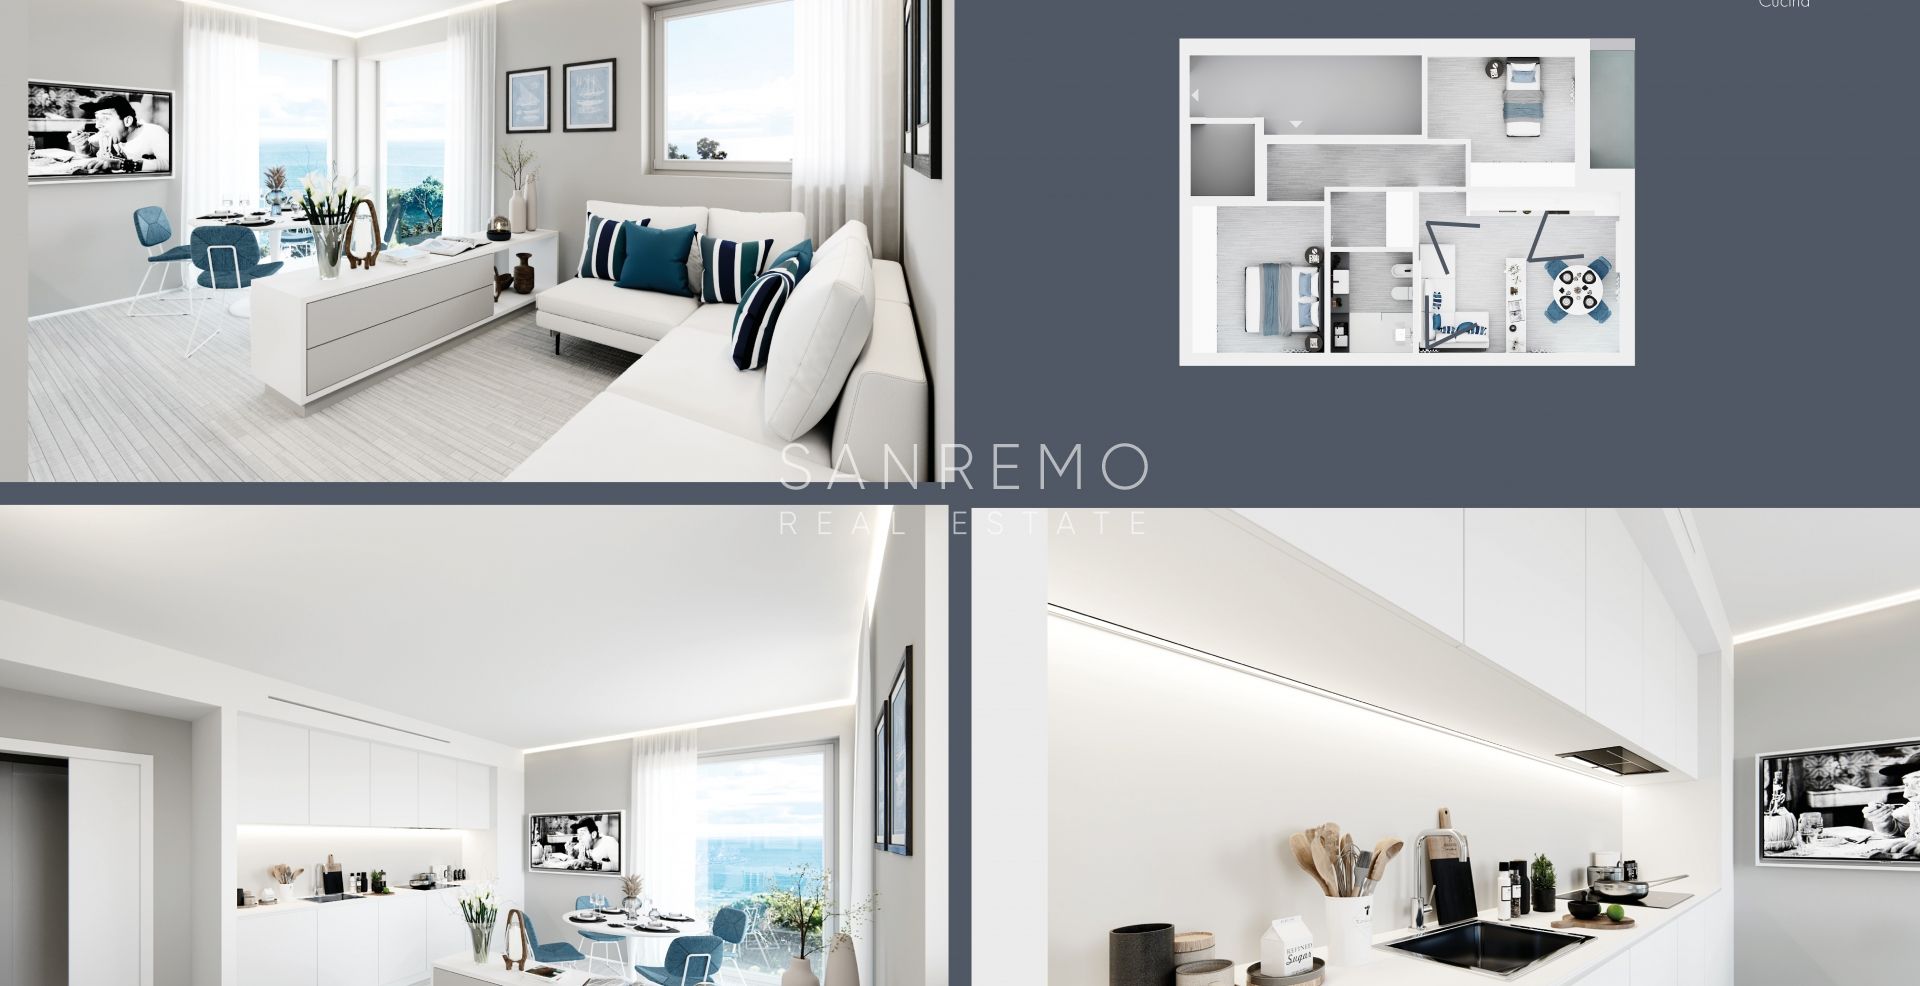 Nouveaux appartements en vente Sanremo